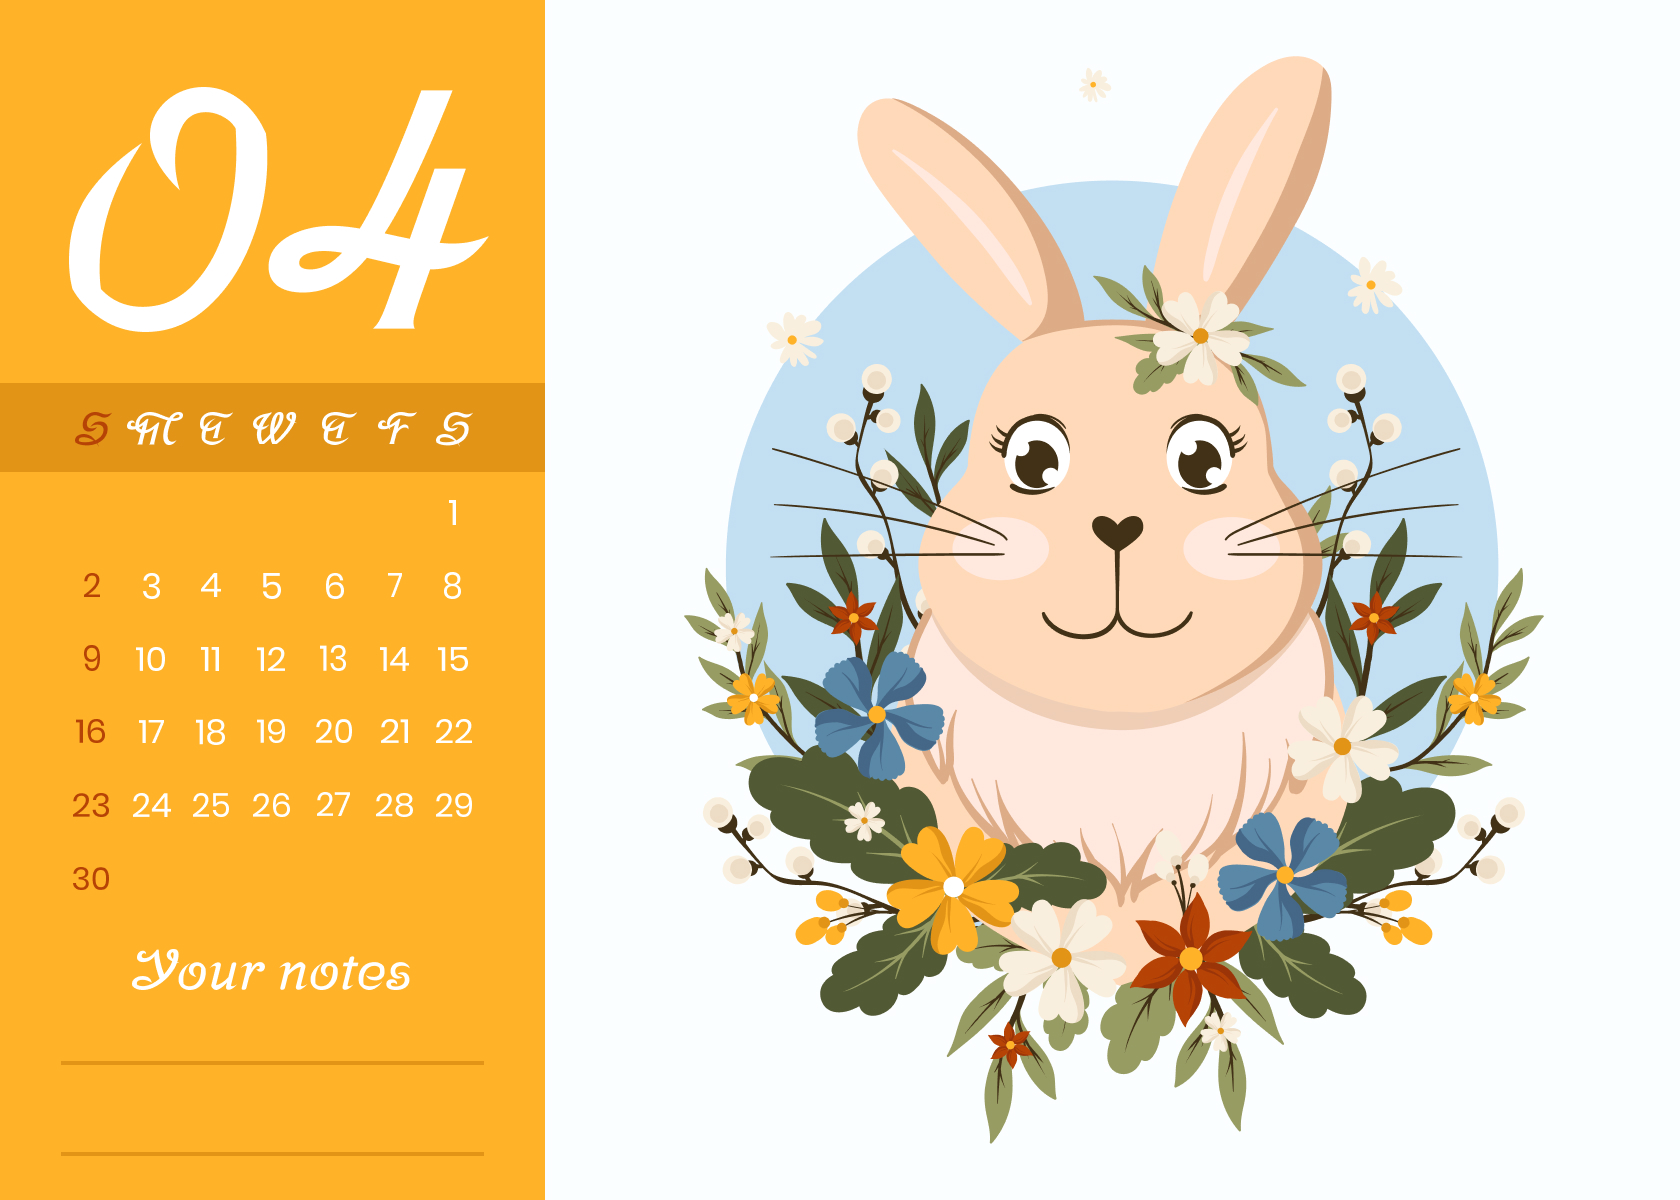 Calendar with a cartoon rabbit in a wreath of flowers.